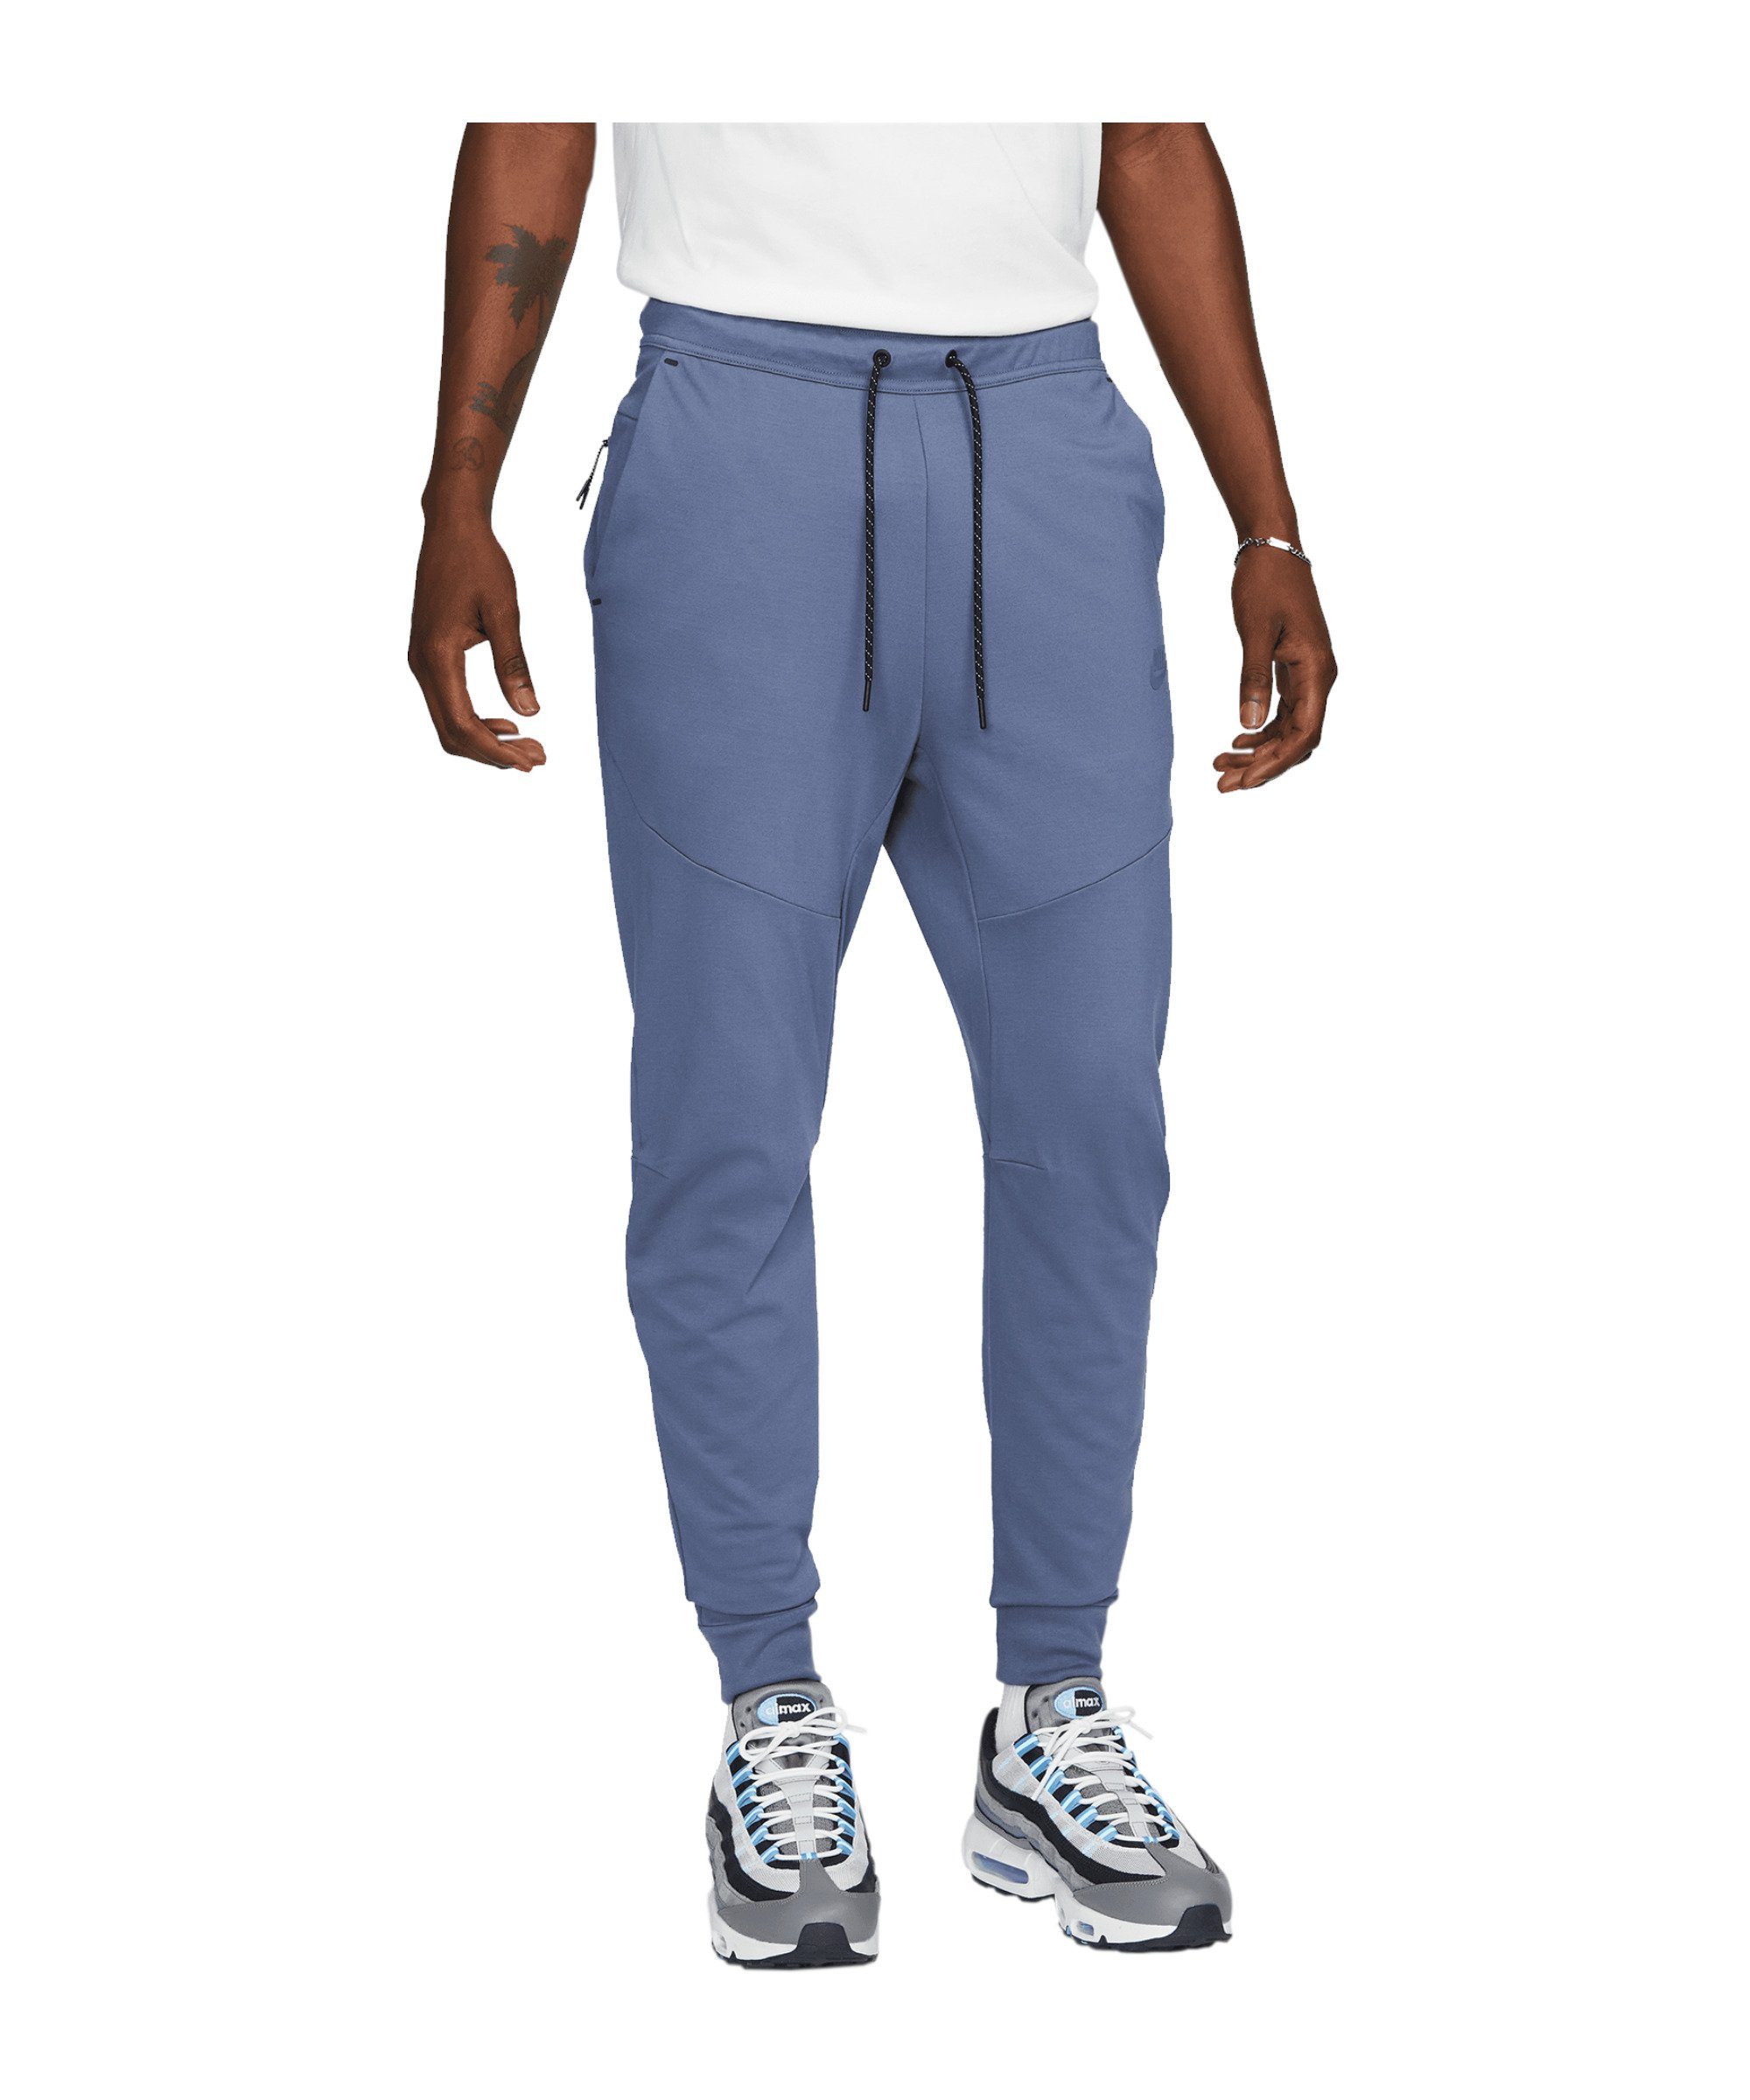 Blaue Nike Herren Jogginghosen online kaufen | OTTO